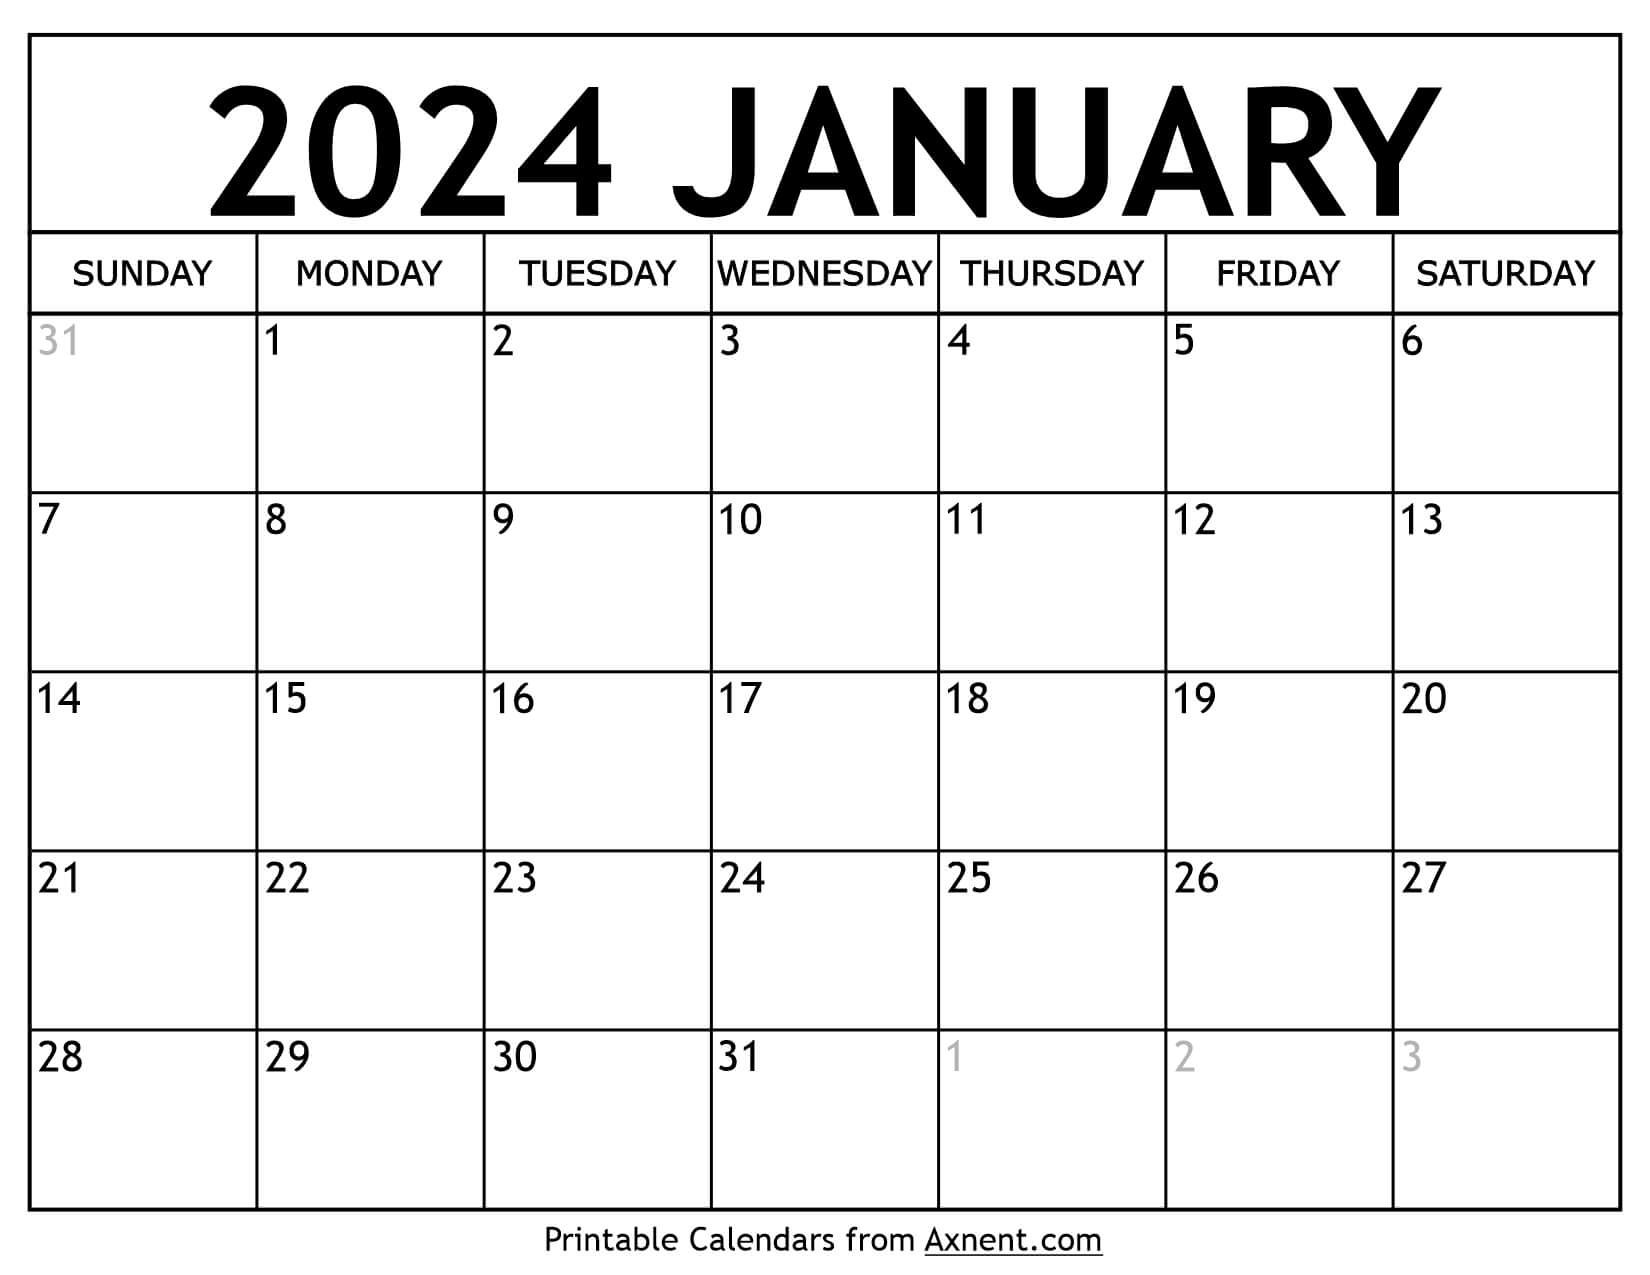 Printable January 2024 Calendar Template - Print Now for Blank Calendar January 2024 Printable